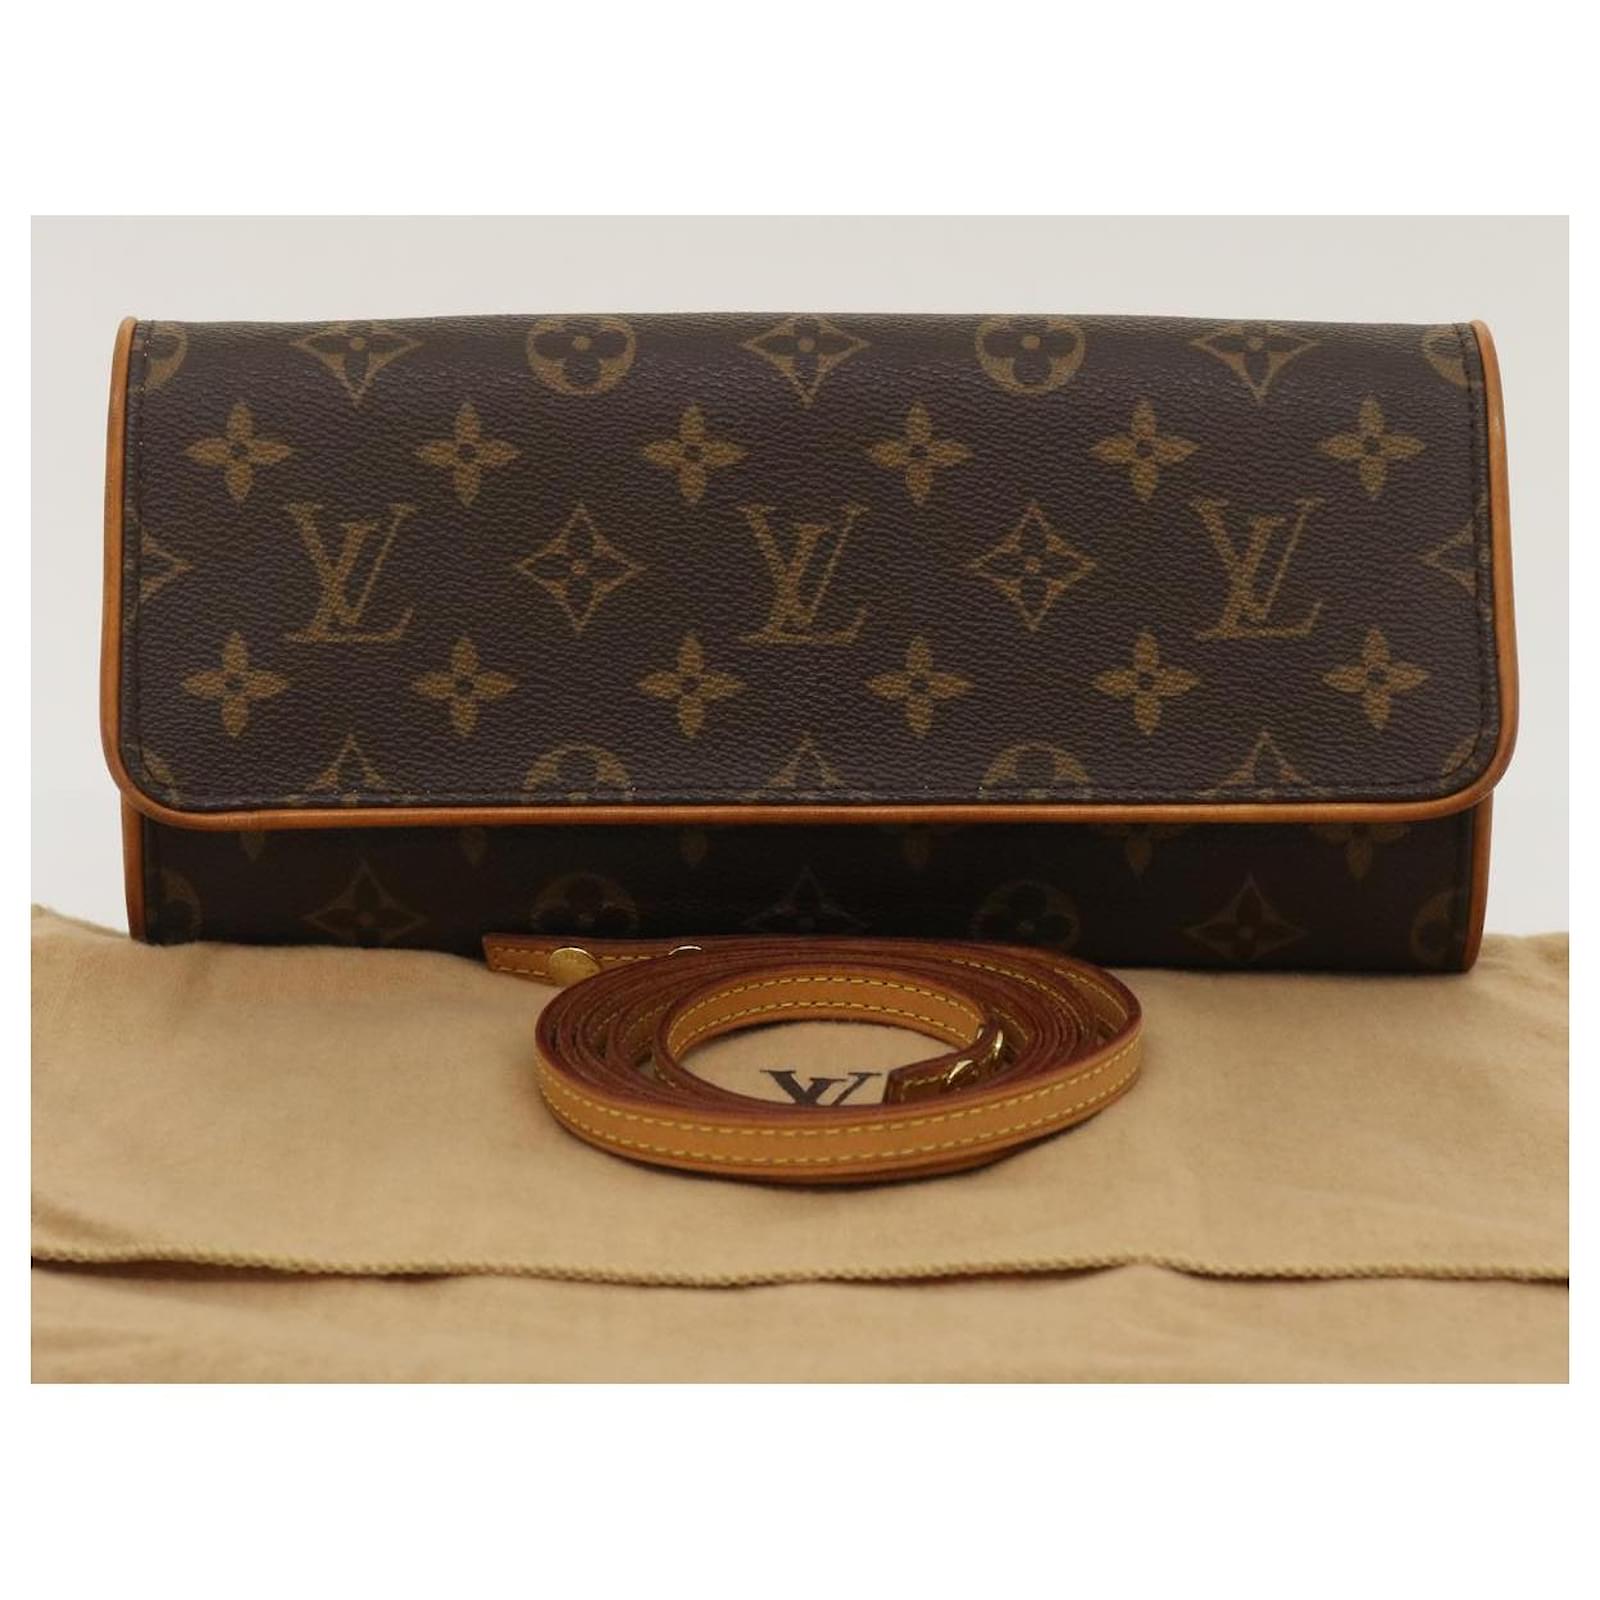 Authentic Louis Vuitton Popincourt Haut M40007 Brown Monogram Hand